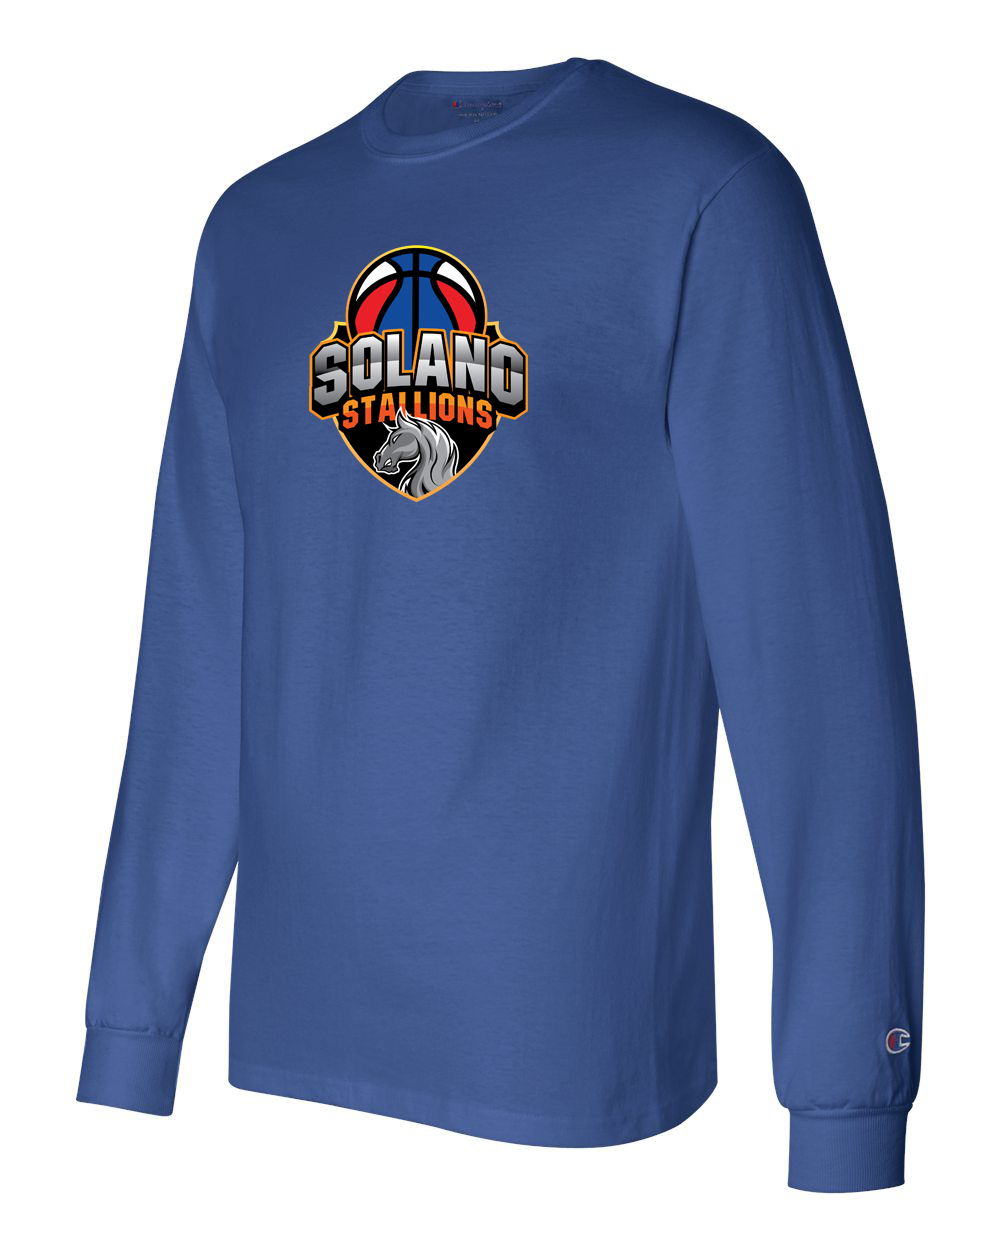 Solano Stallions Champion Long Sleeve T-Shirt